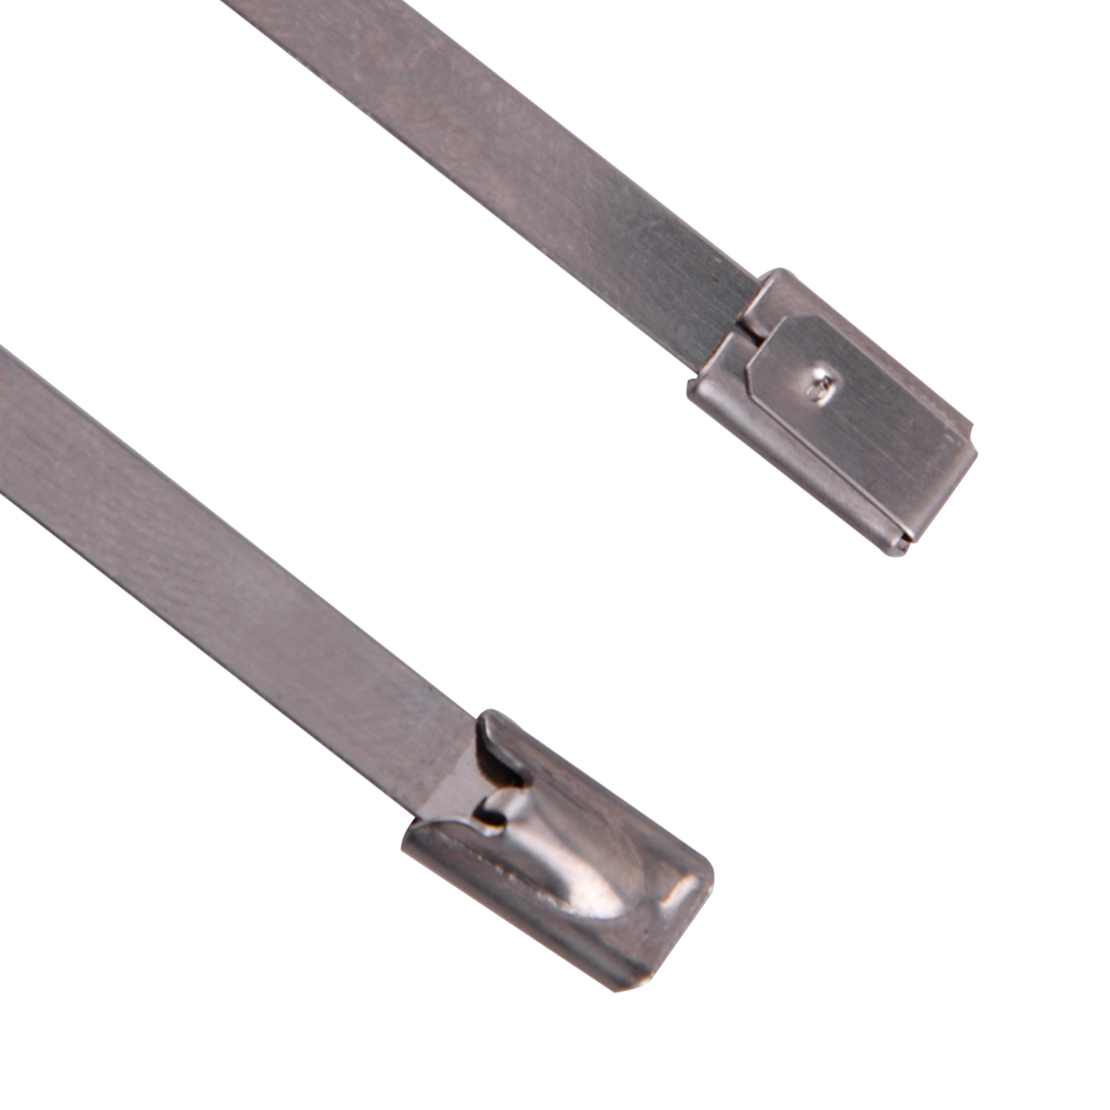 10x Edelstahl Kabelbinder Kabel Band Stainless Steel Cable Zip Ties 20cmx4,6mm